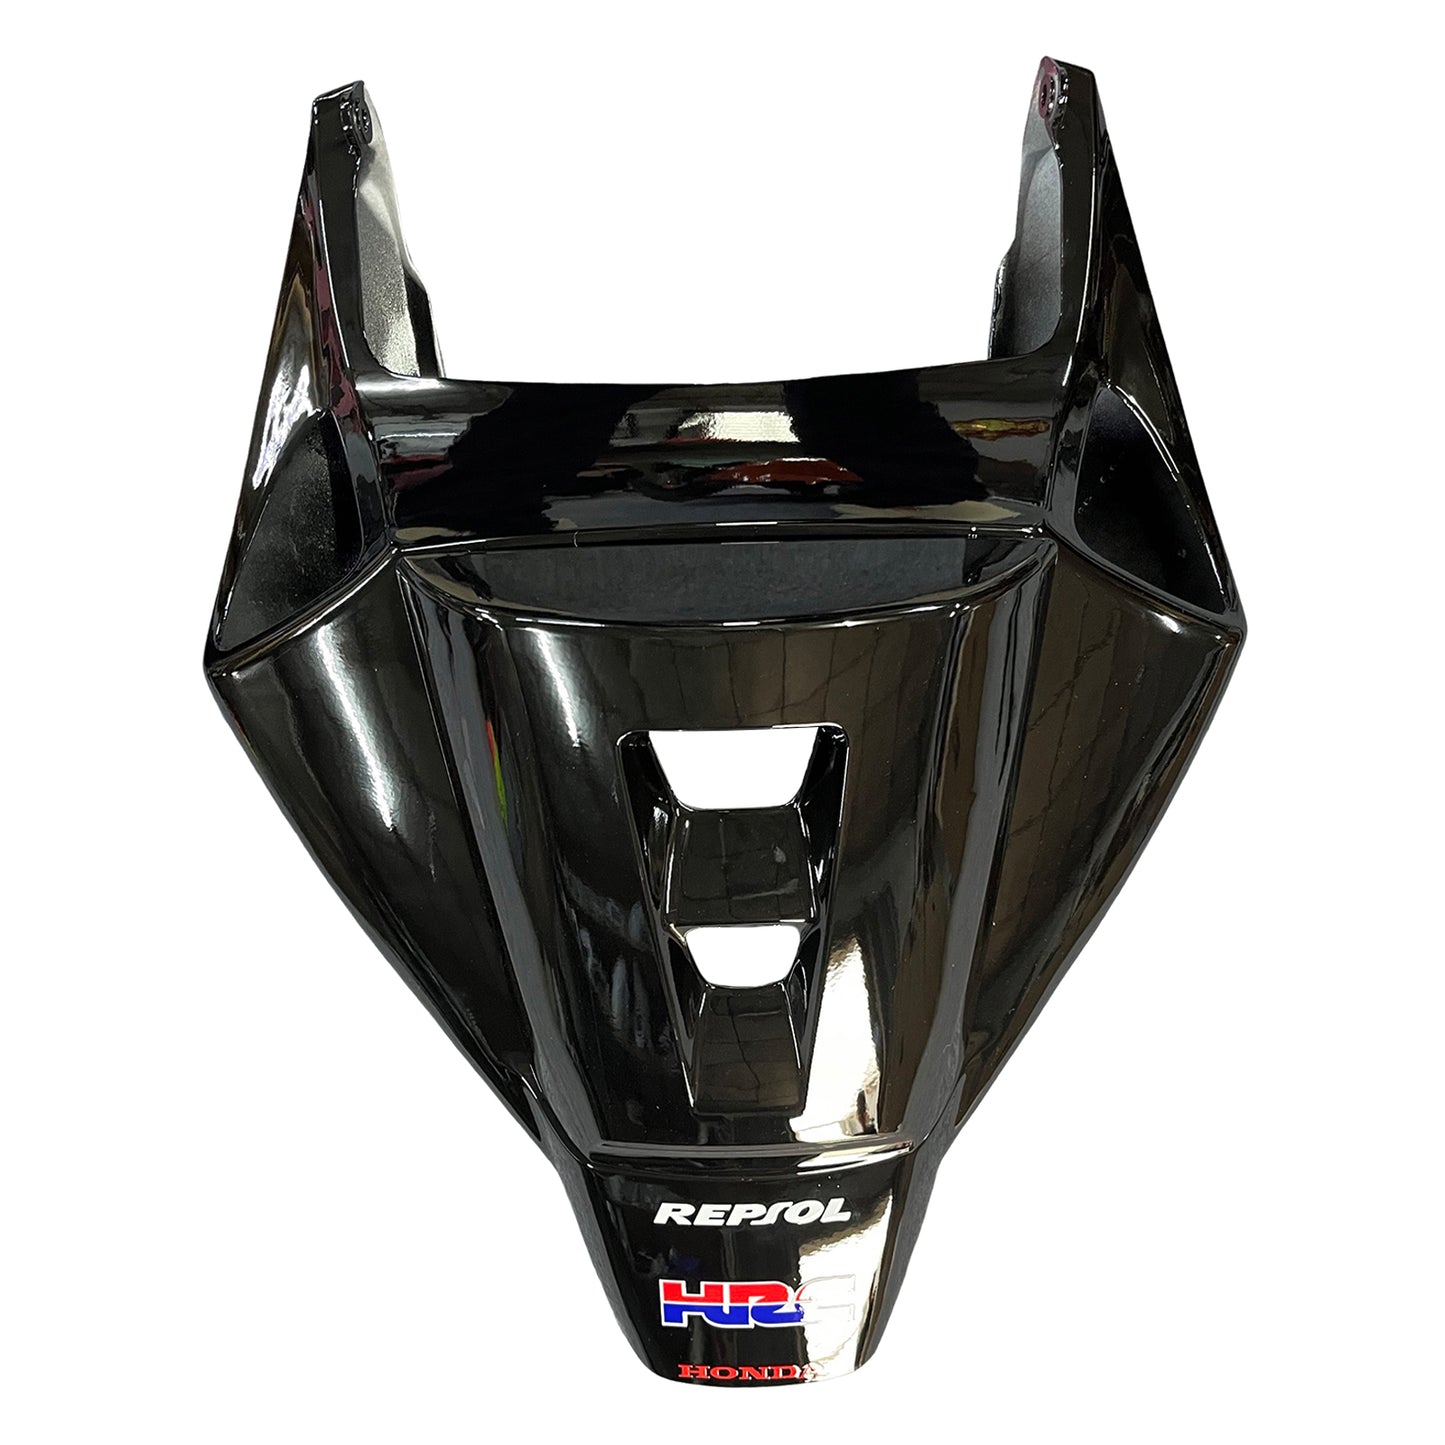 Amotopart-Verkleidungen Honda CBR1000RR 2004-2005 Verziehung Repsol Racing Black Orange Abzugskit